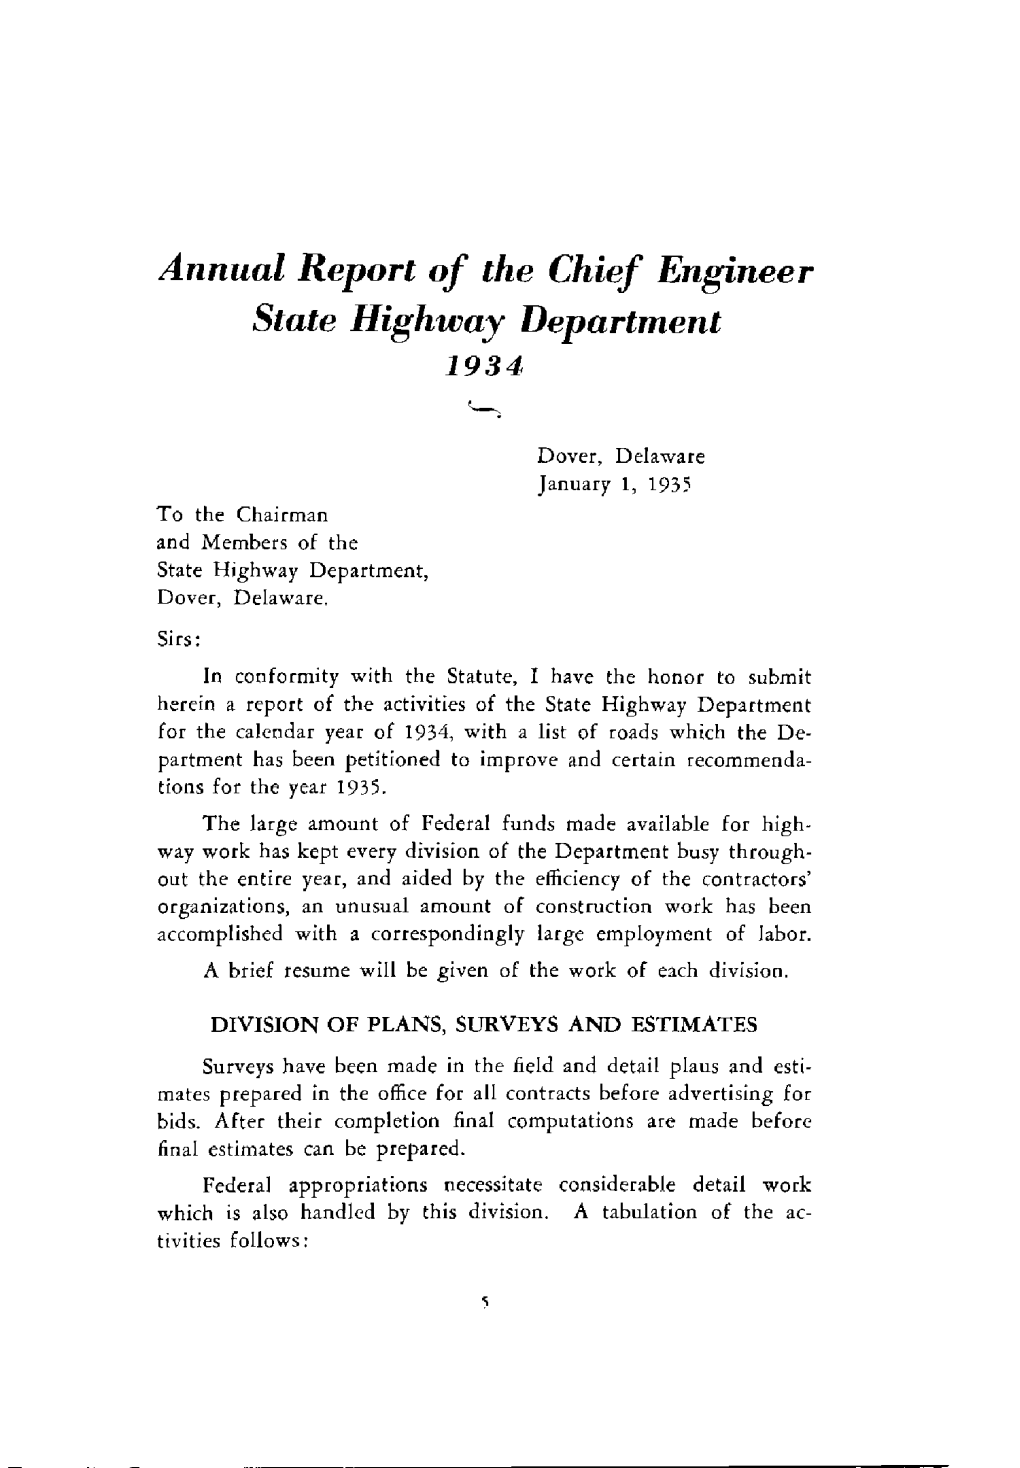 Chief Engineer's Report